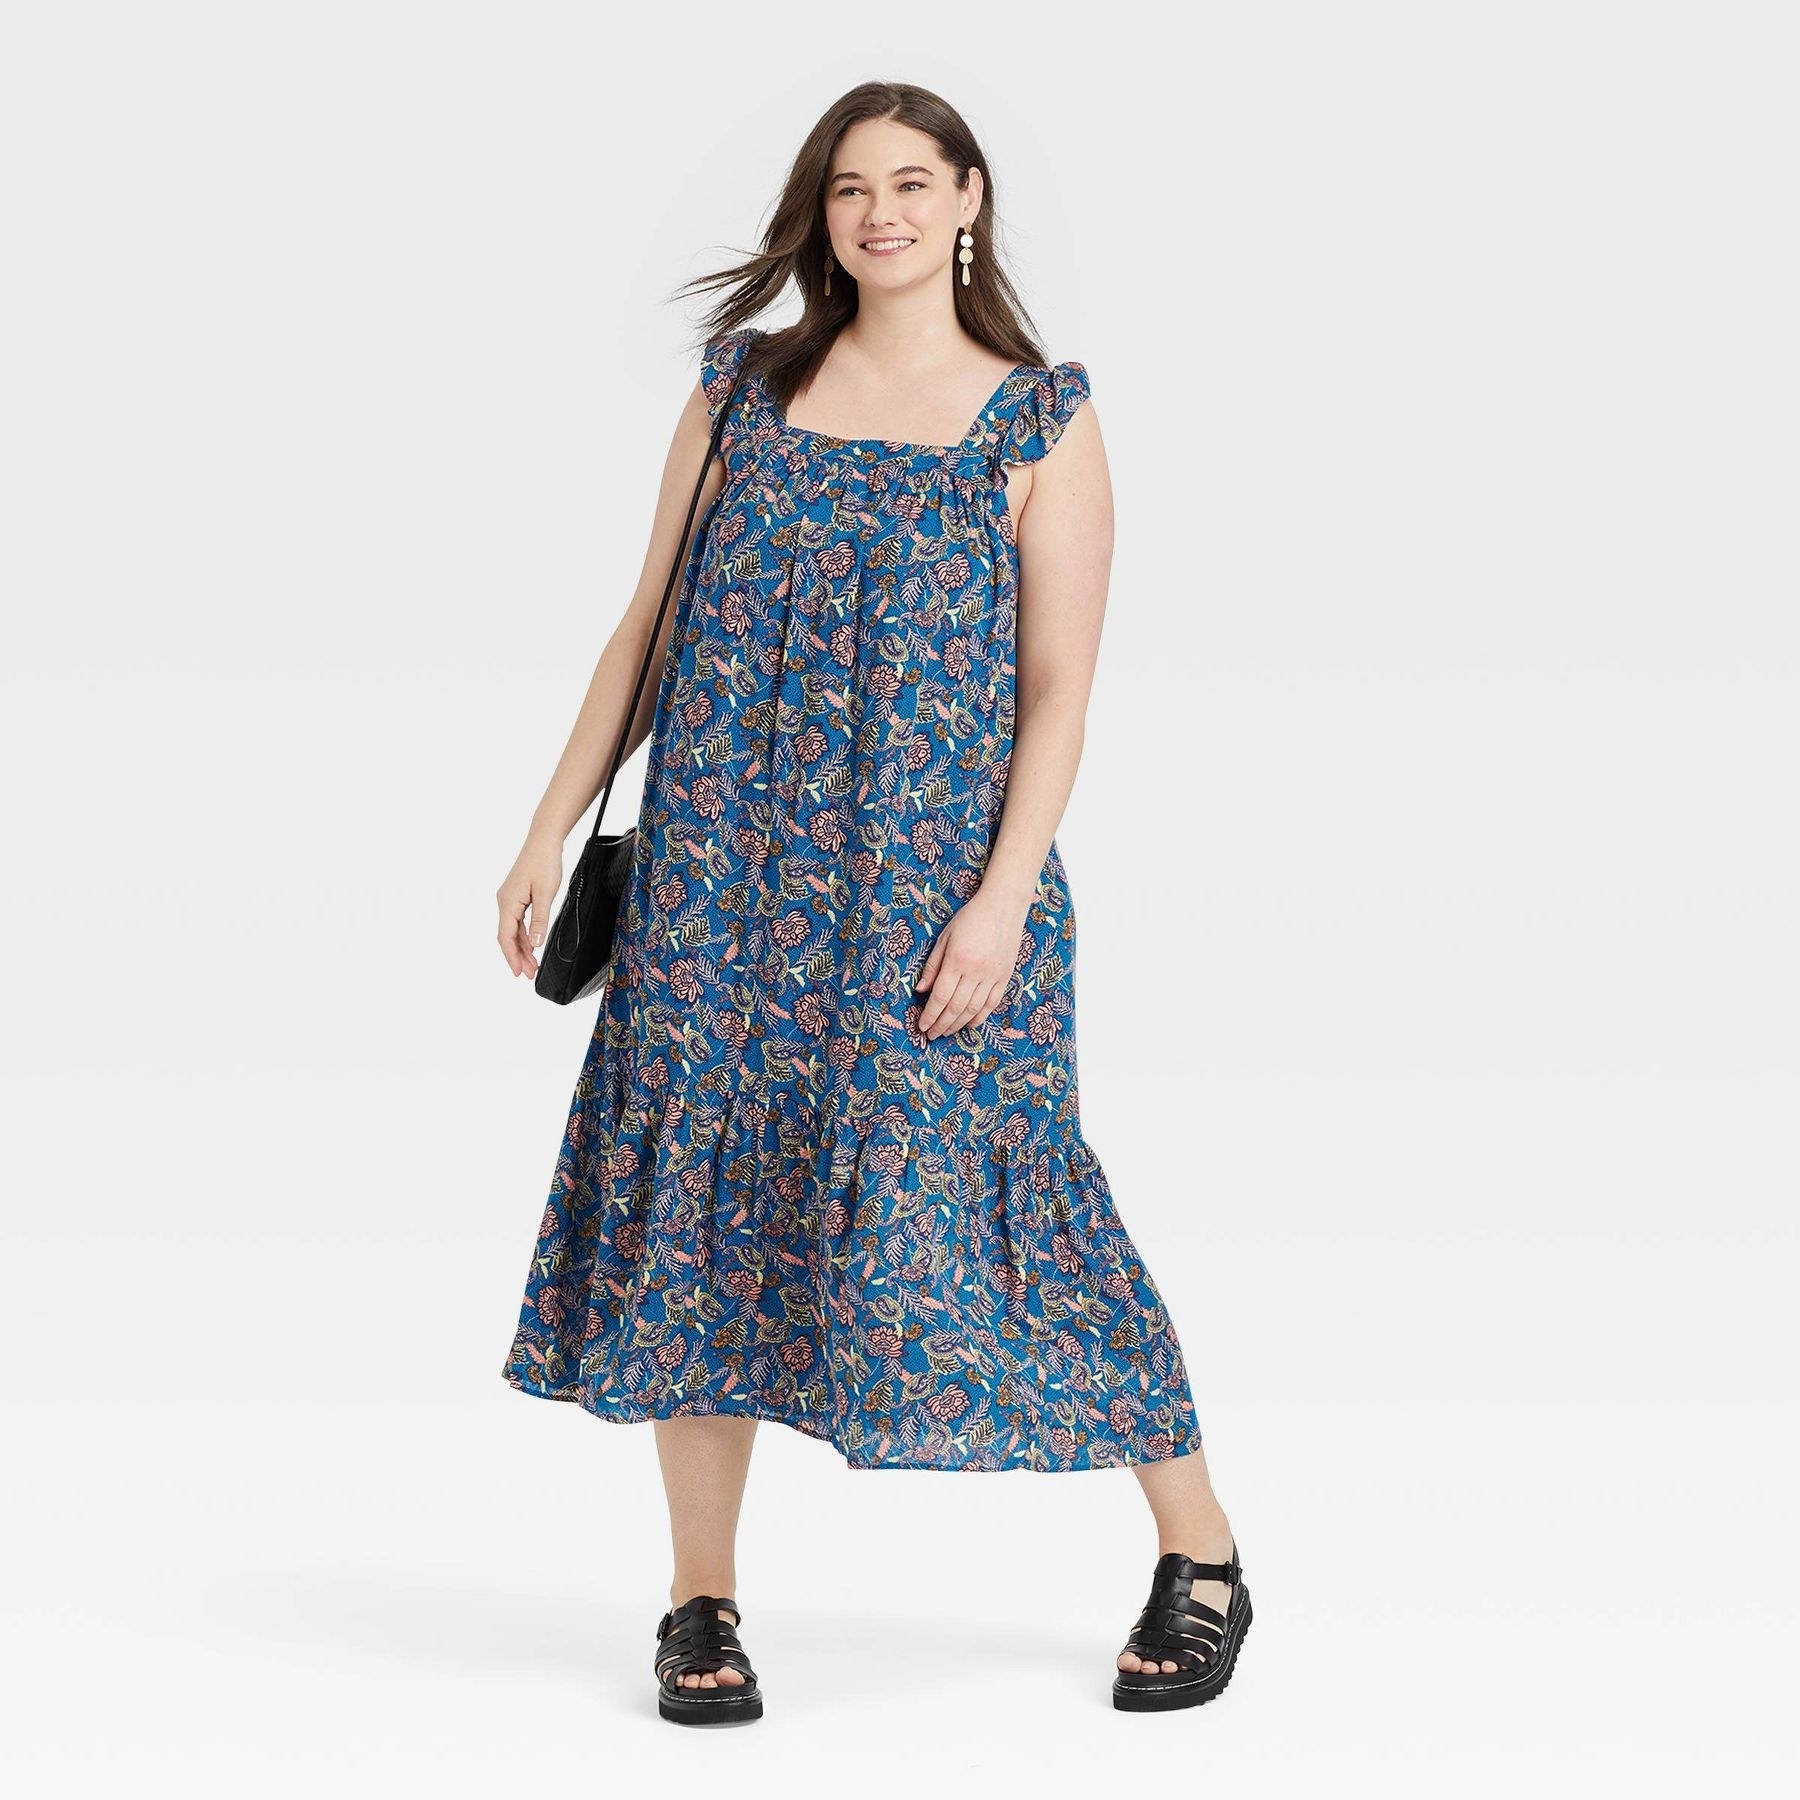 model wearing the blue floral midi dress